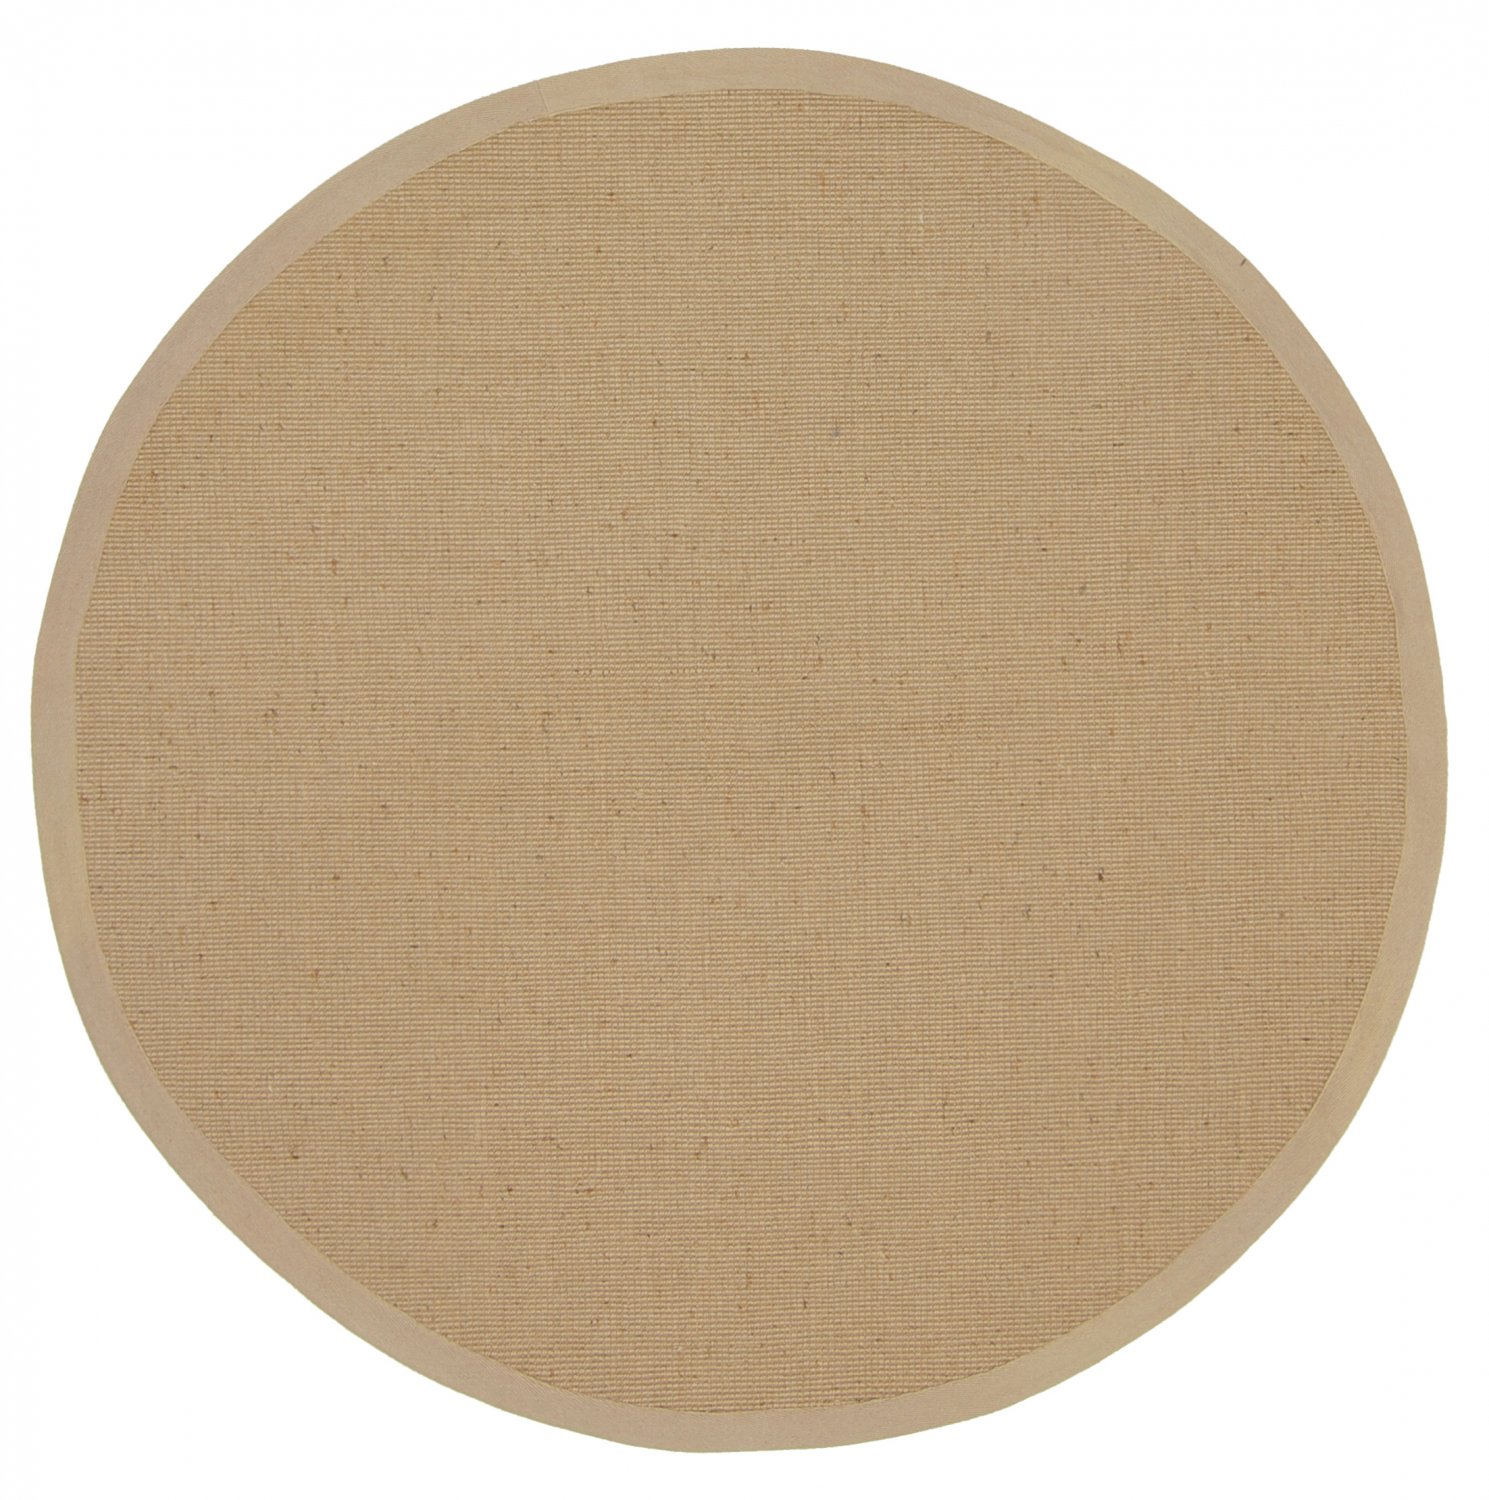 Round rug (sisal) - Agave (beige/ivory)